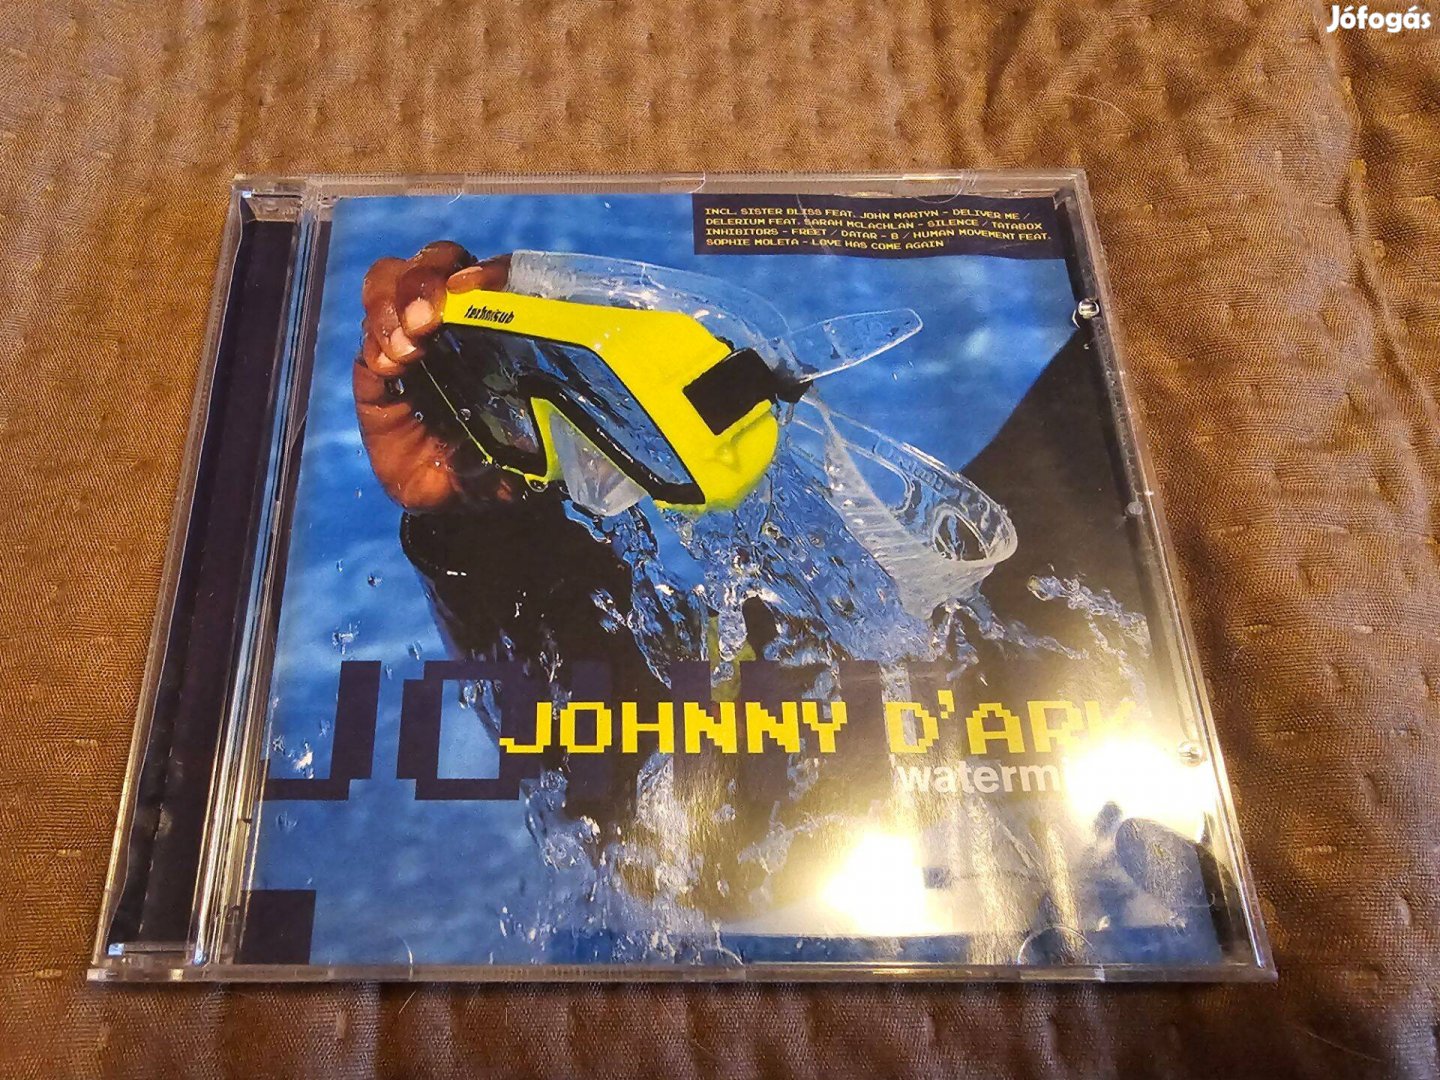 Johnny D'ark - Watermix 2001 CD